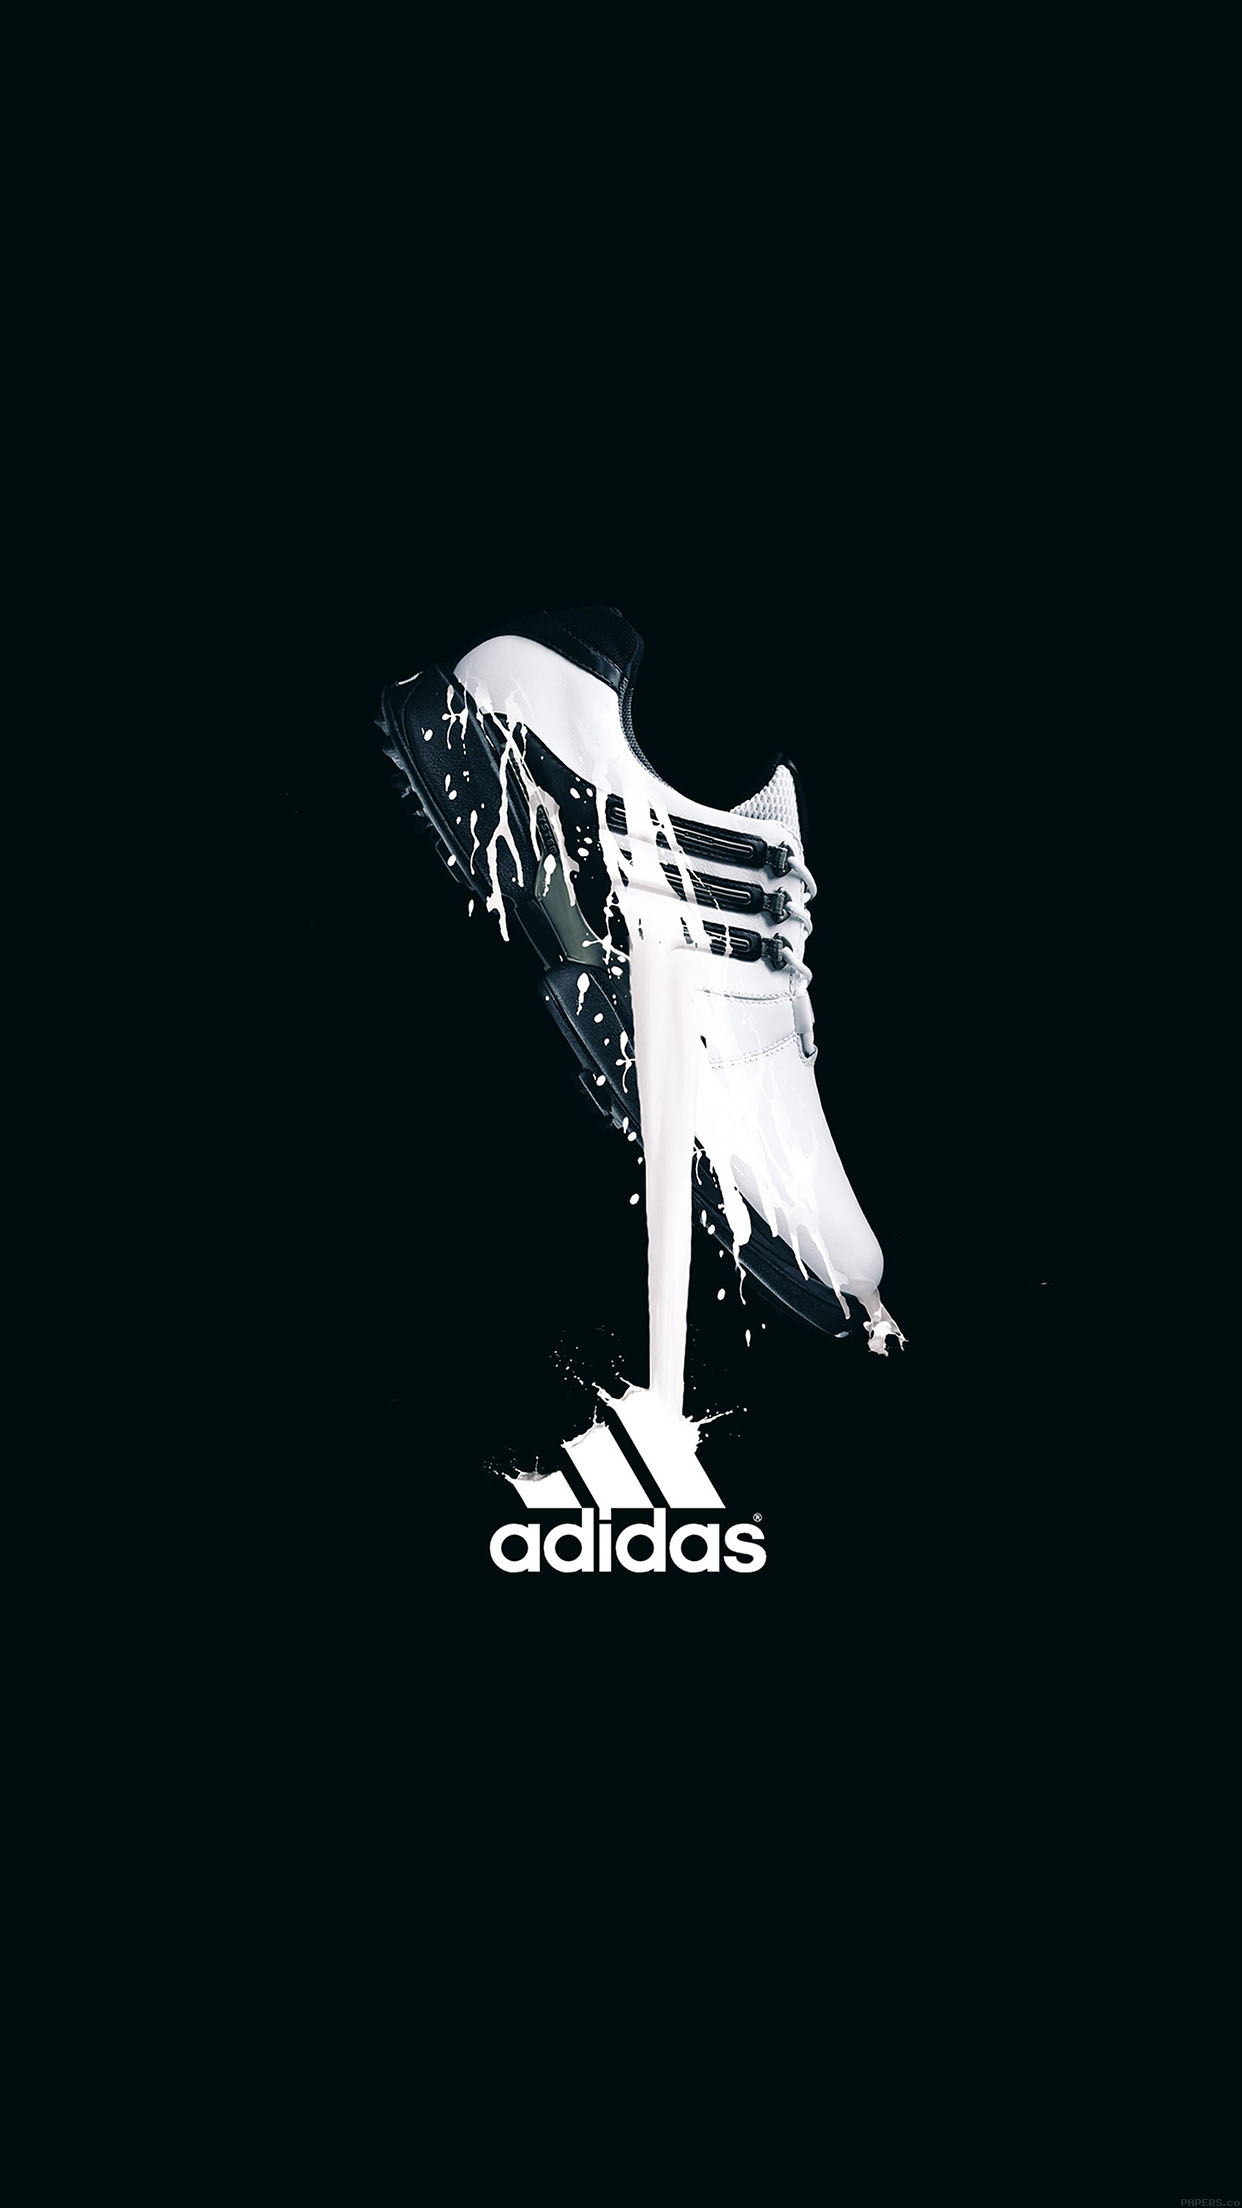 1242x2208 | iPhone11 wallpaper | ab48-wallpaper-adidas-black-logo- sports